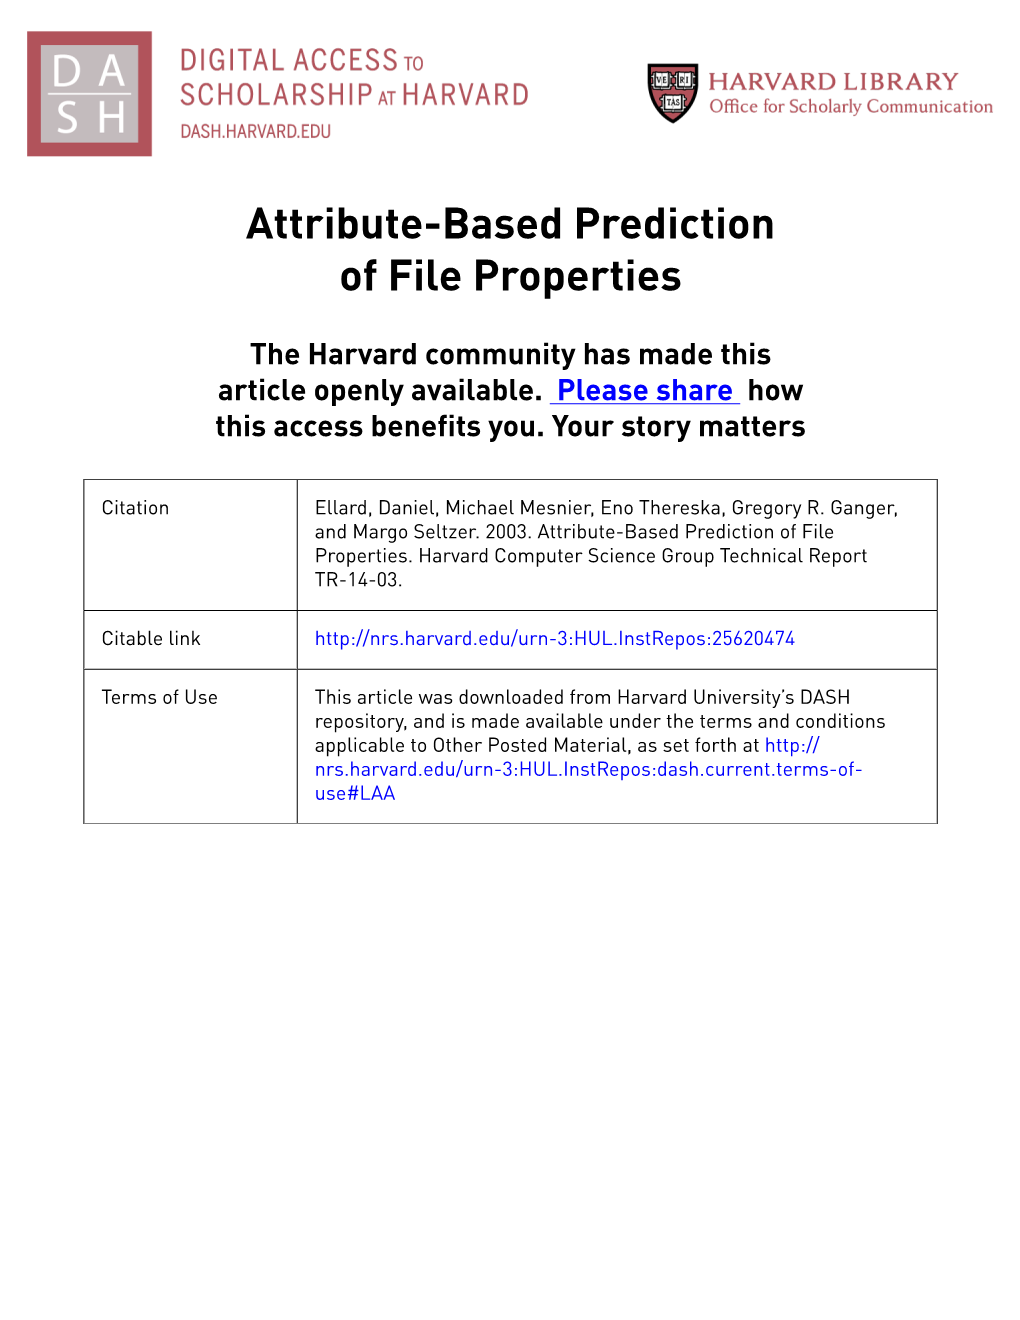 Attribute-Based Prediction of File Properties